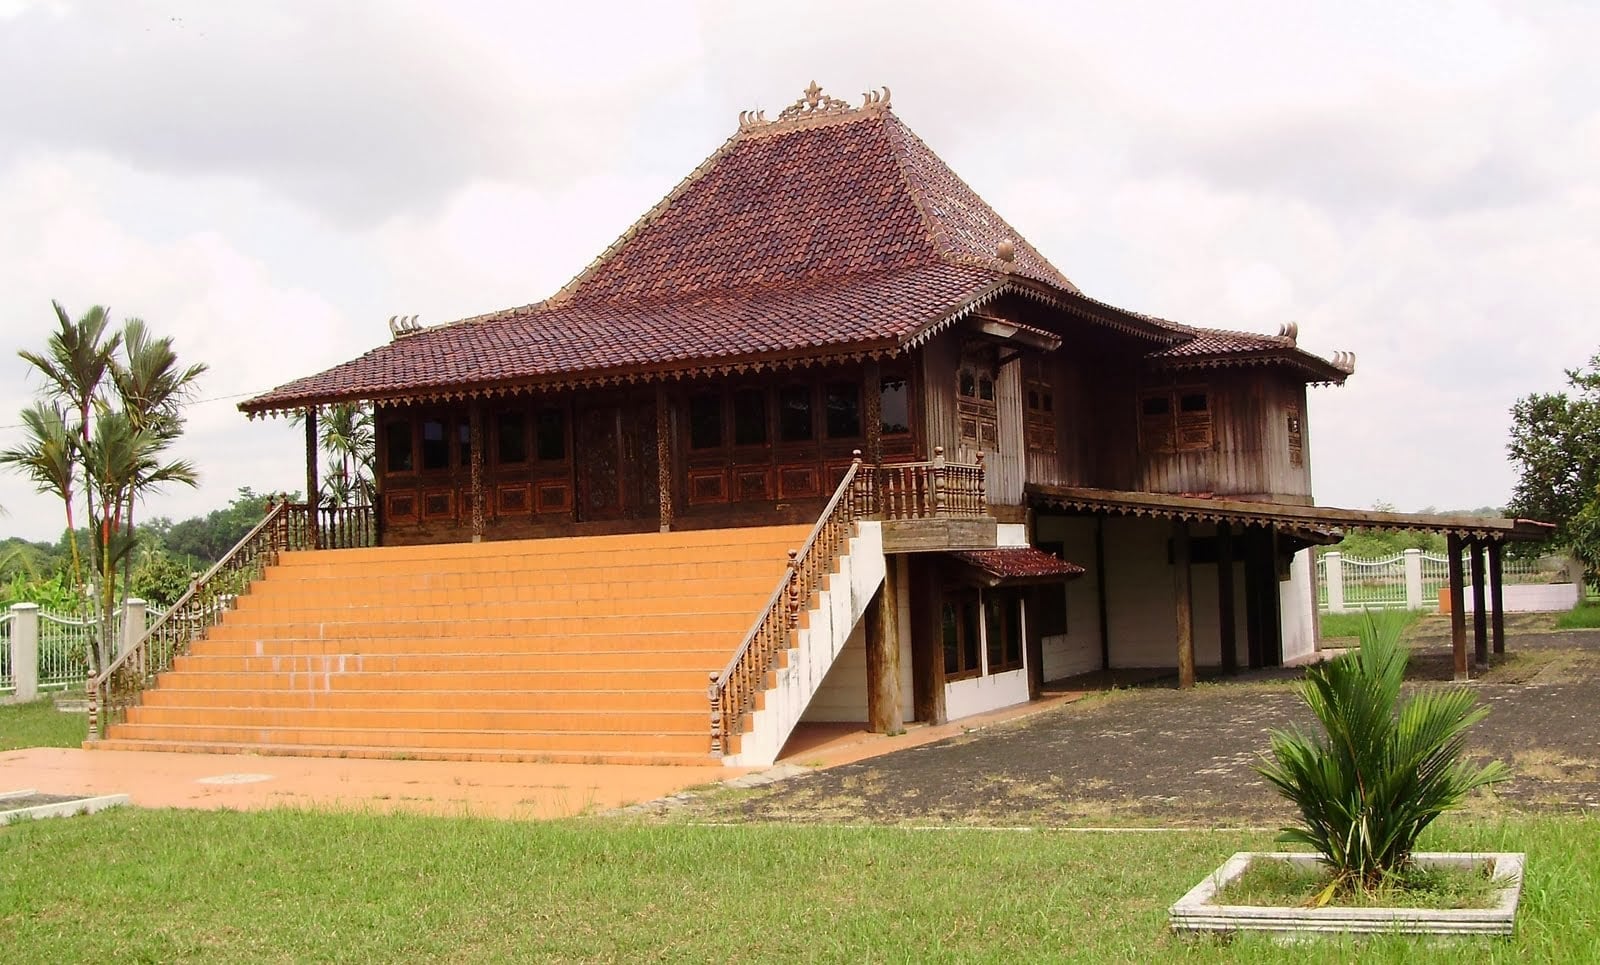 Wow 21 Gambar Rumah Adat Joglo Yogyakarta 58 Dalam Inspirasi Ide Desain Interior Rumah untuk 21 Gambar Rumah Adat Joglo Yogyakarta